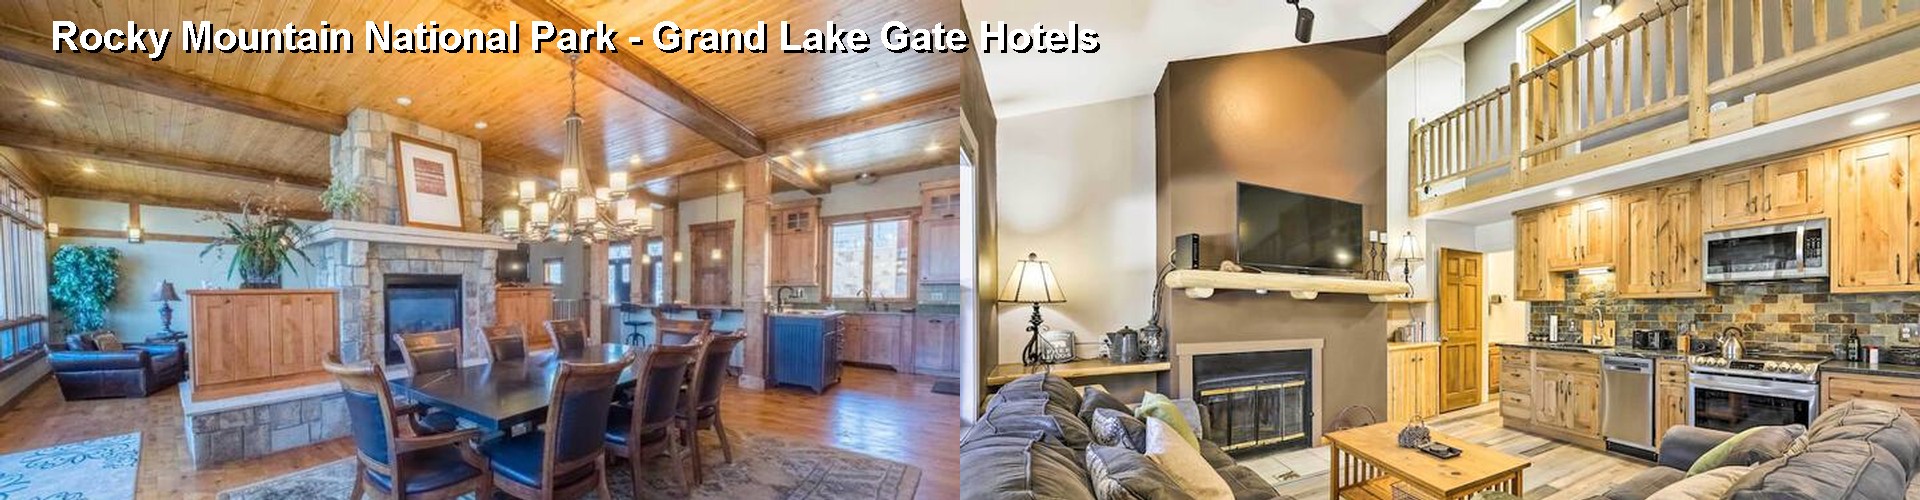 5 Best Hotels near Rocky Mountain National Park - Grand Lake Gate